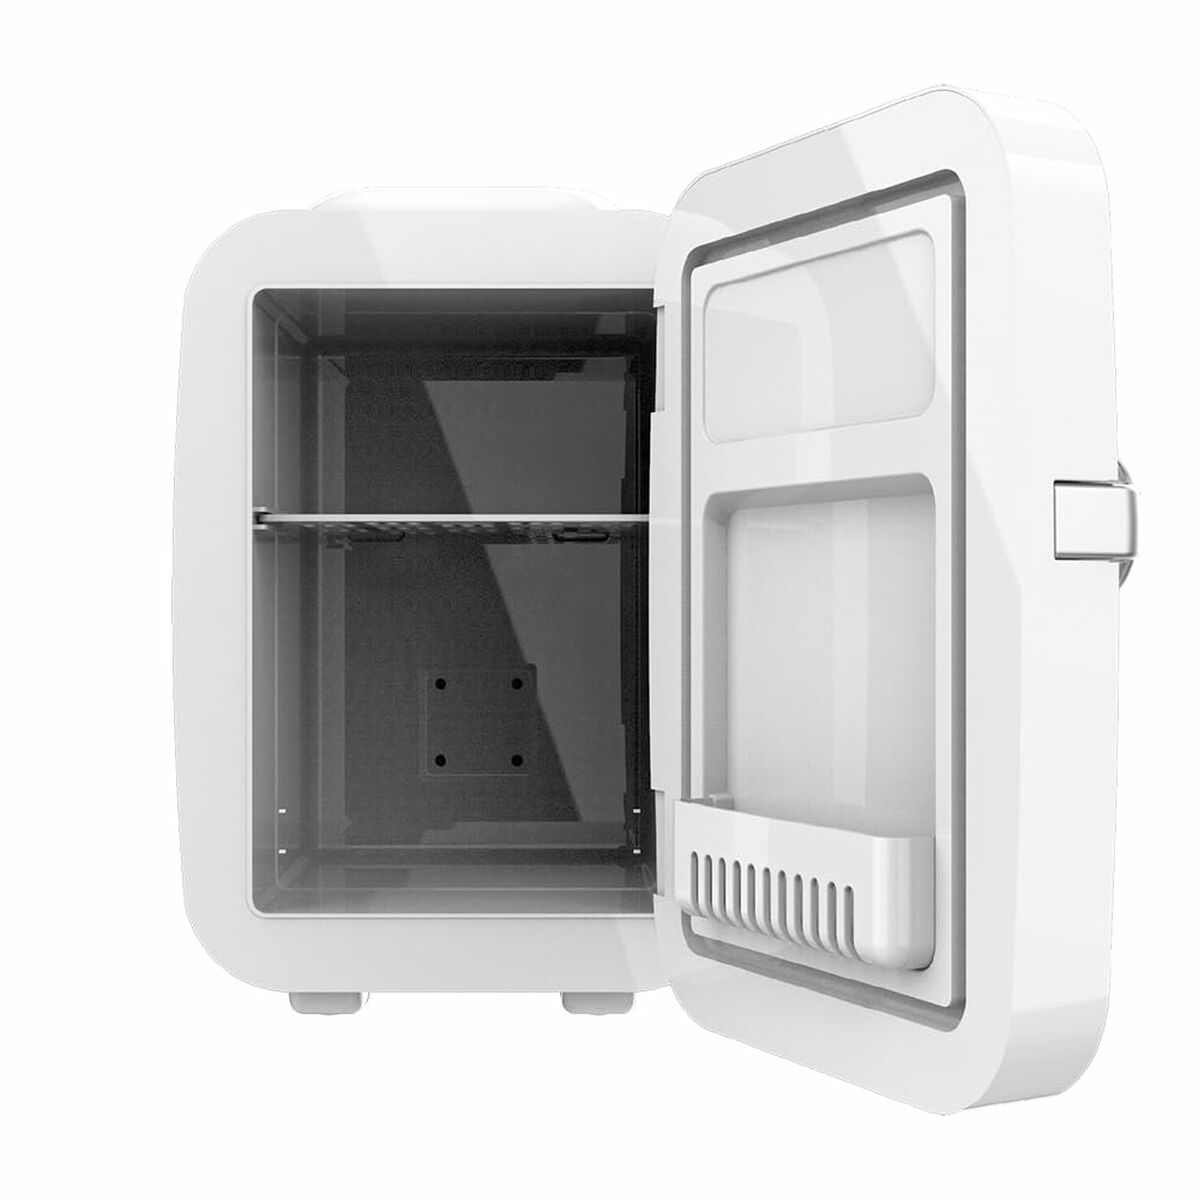 Mini-Kühlschrank Cecotec Rio Weiß